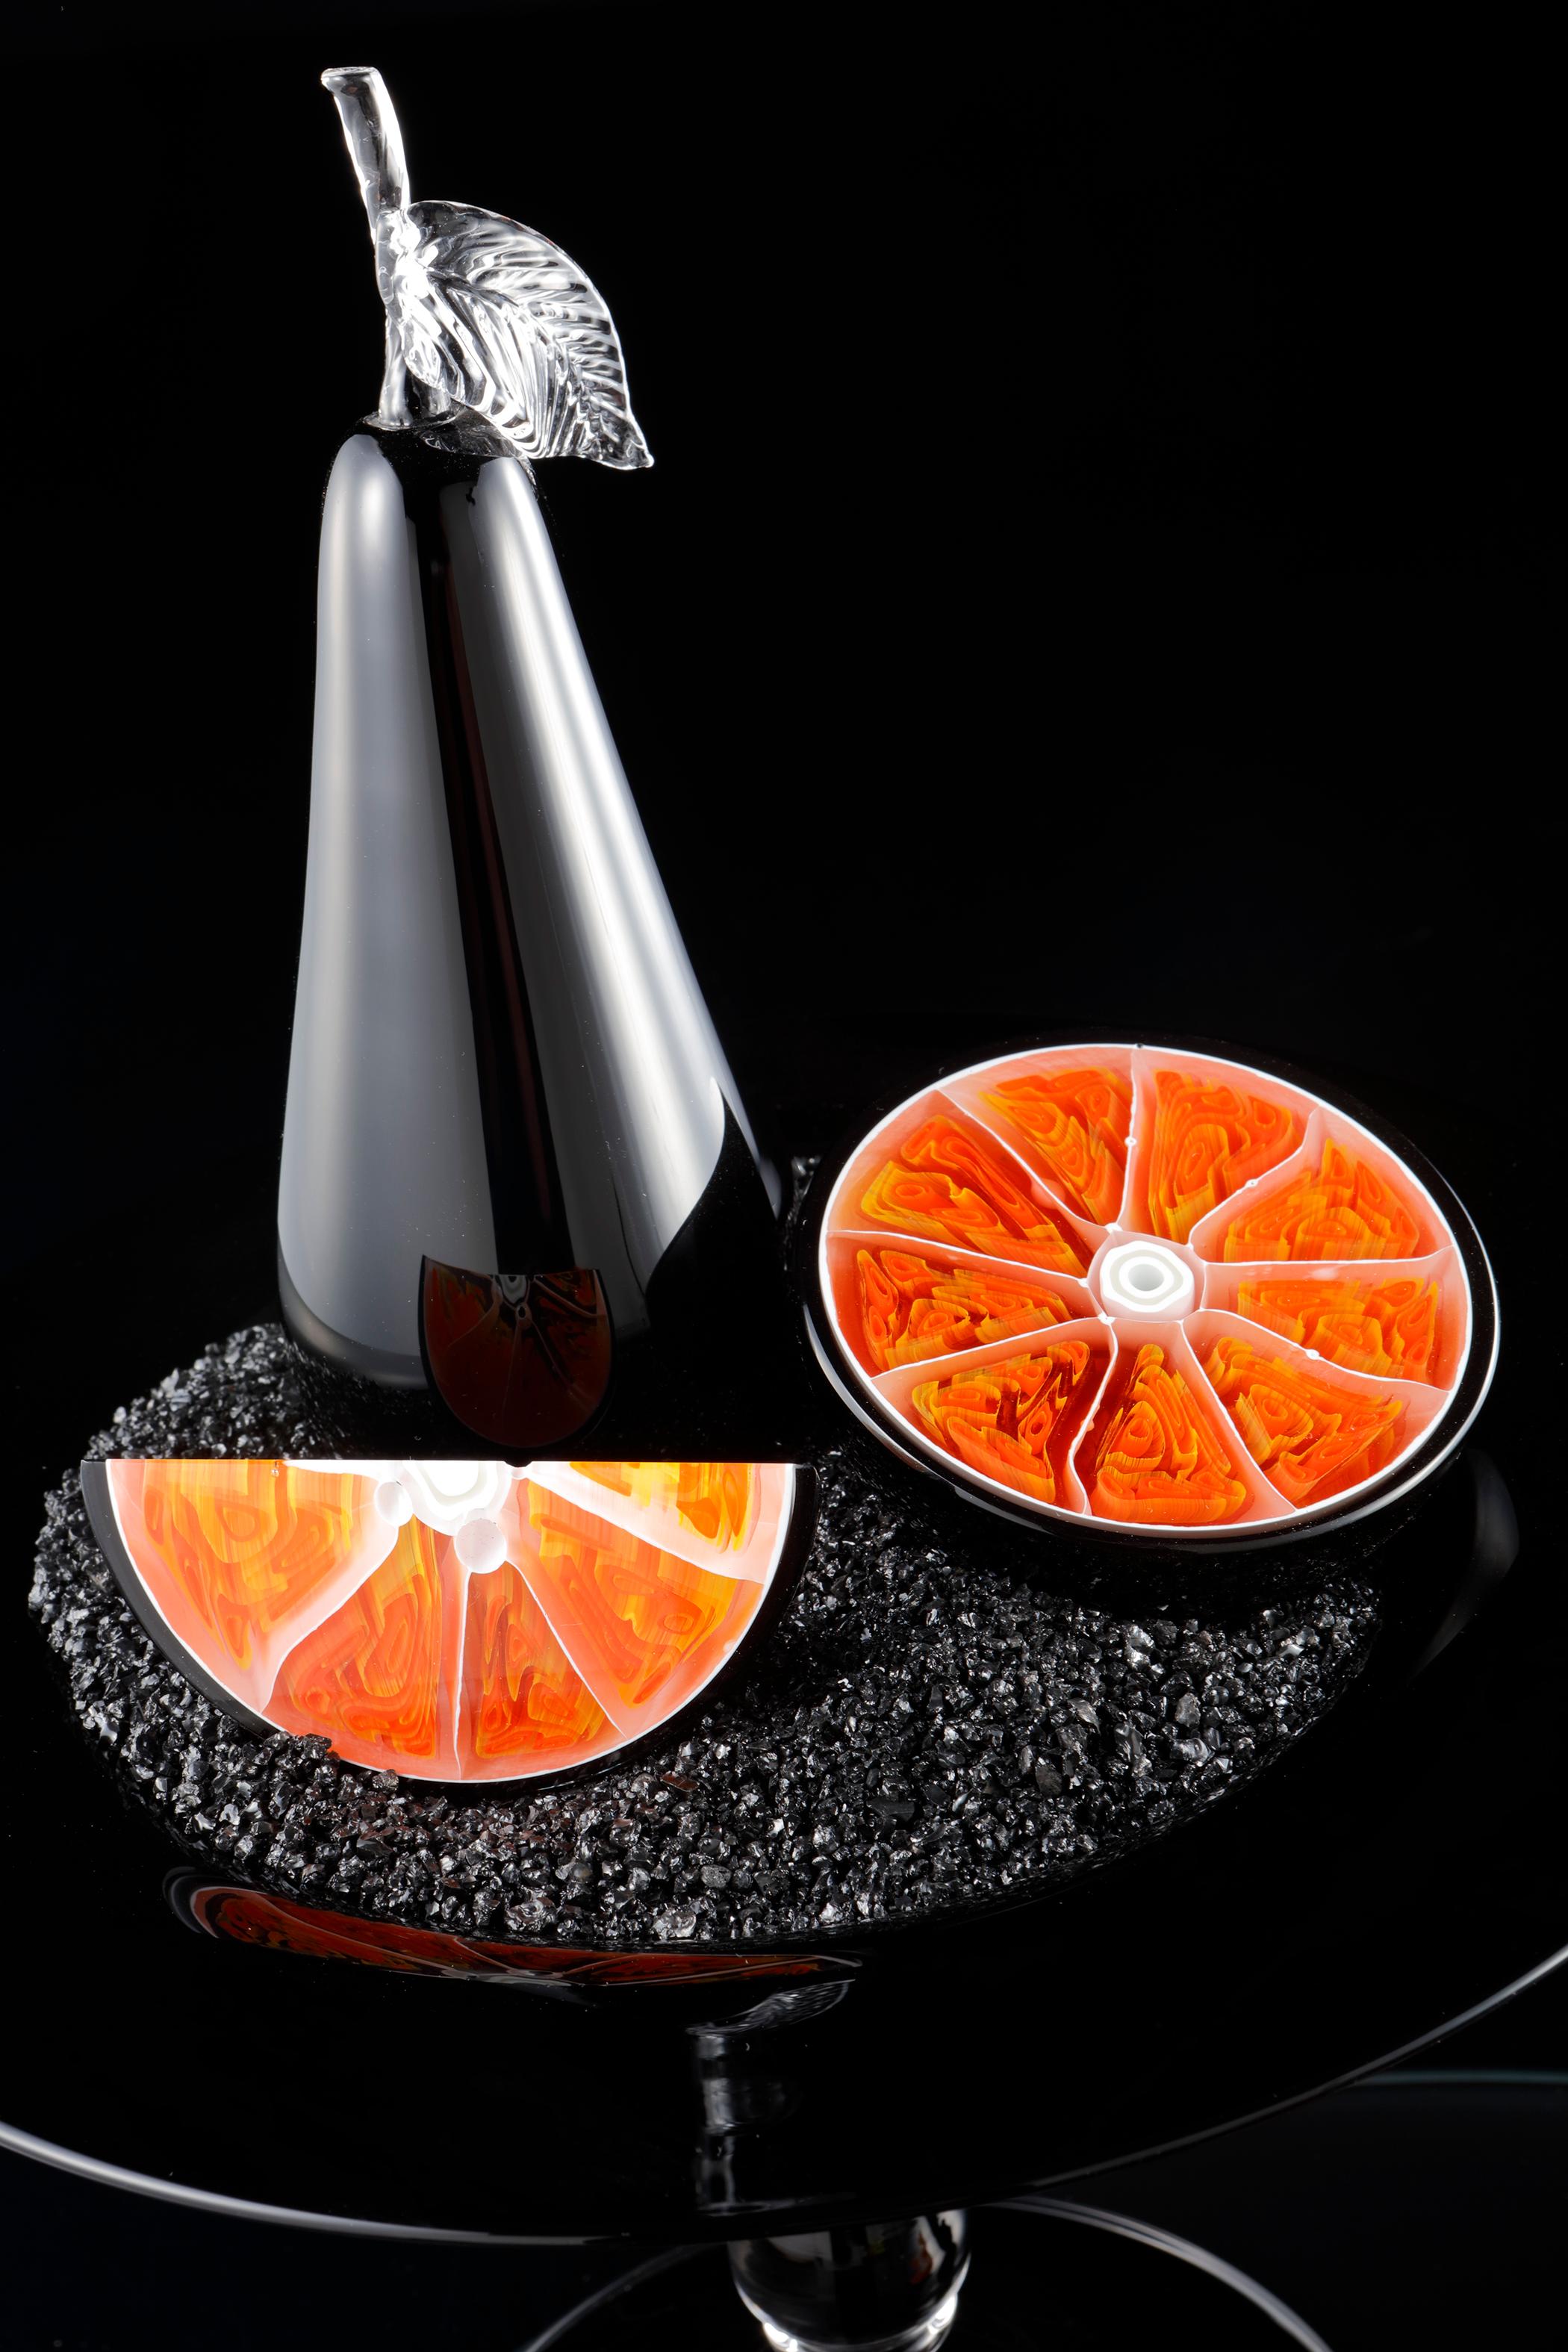 Organic Modern Carbon Orange, a Unique Glass Still Life Installation Art Work by Elliot Walker